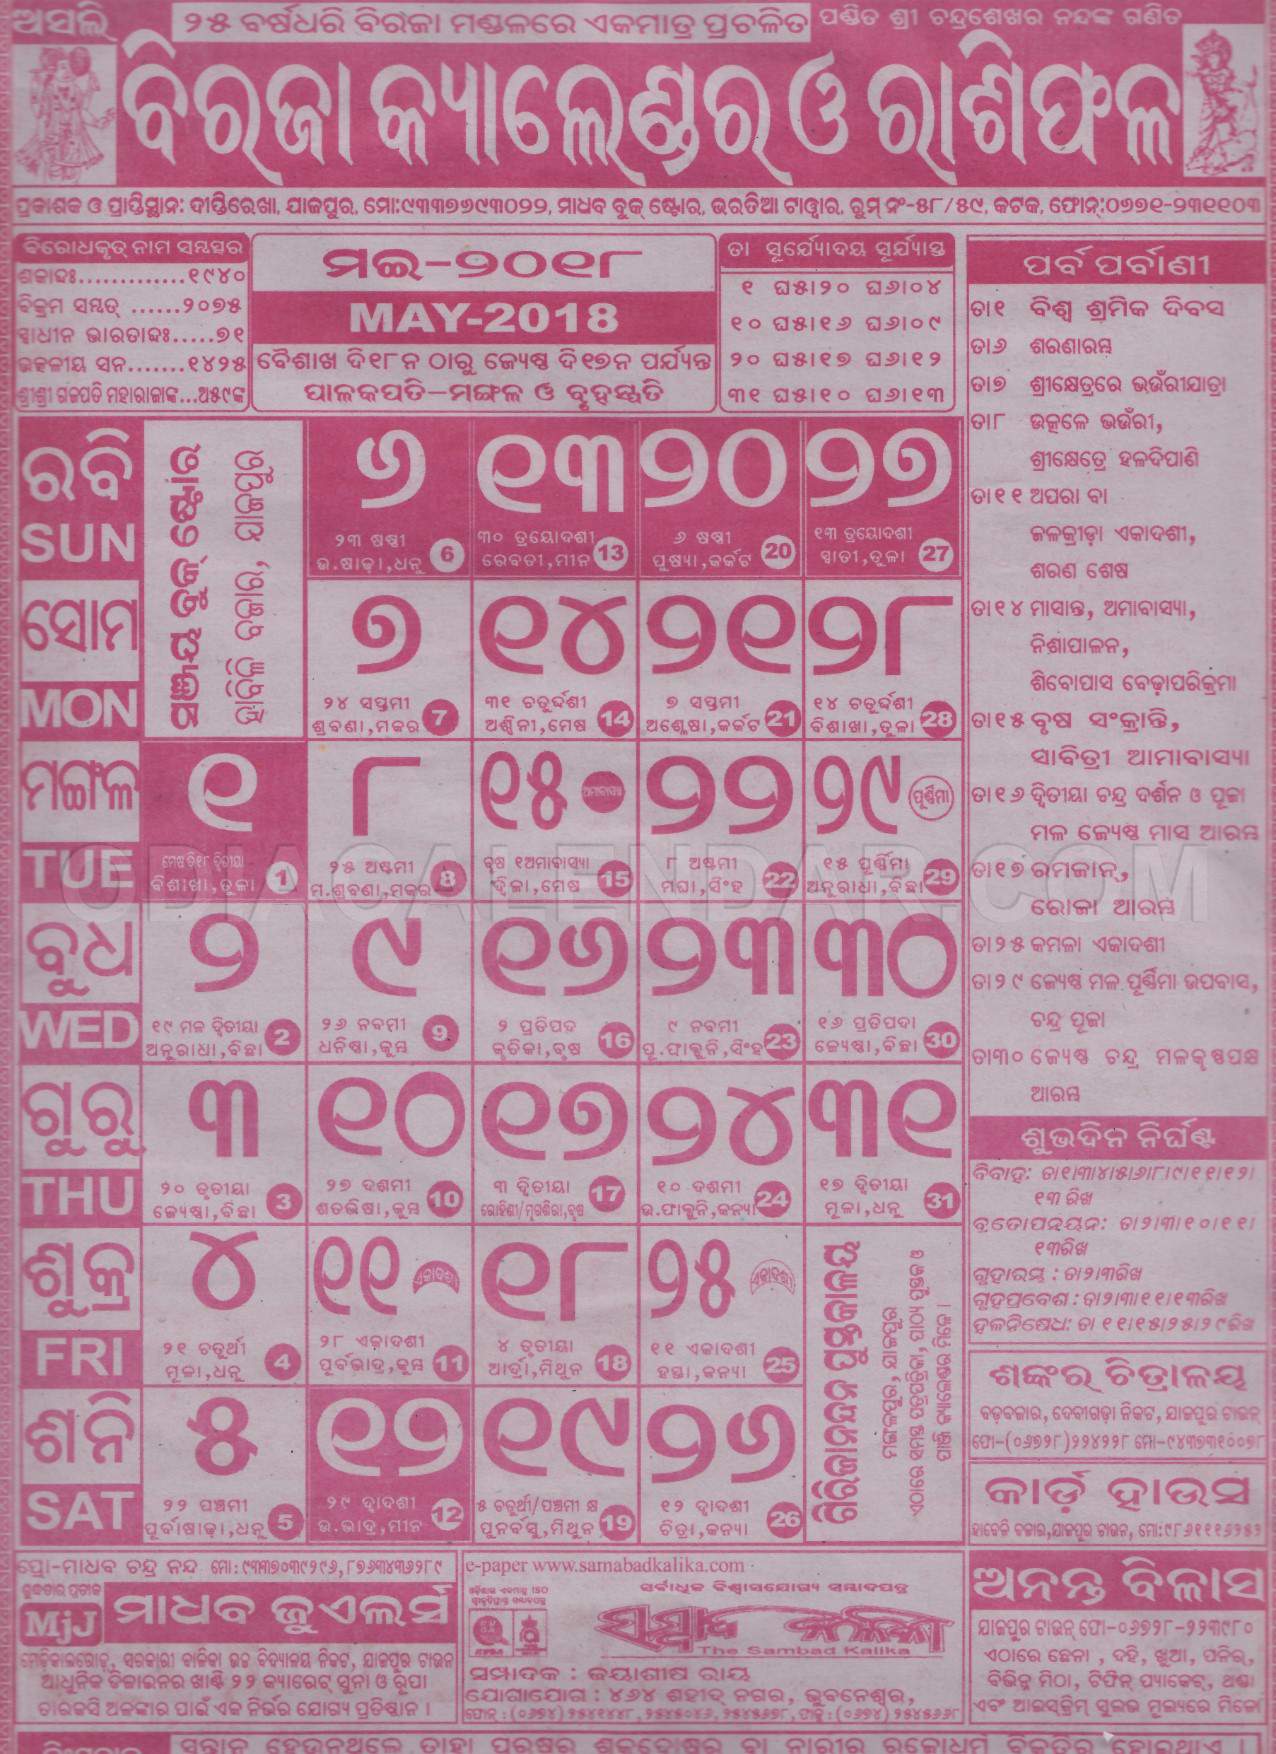 Biraja May 2018 Image